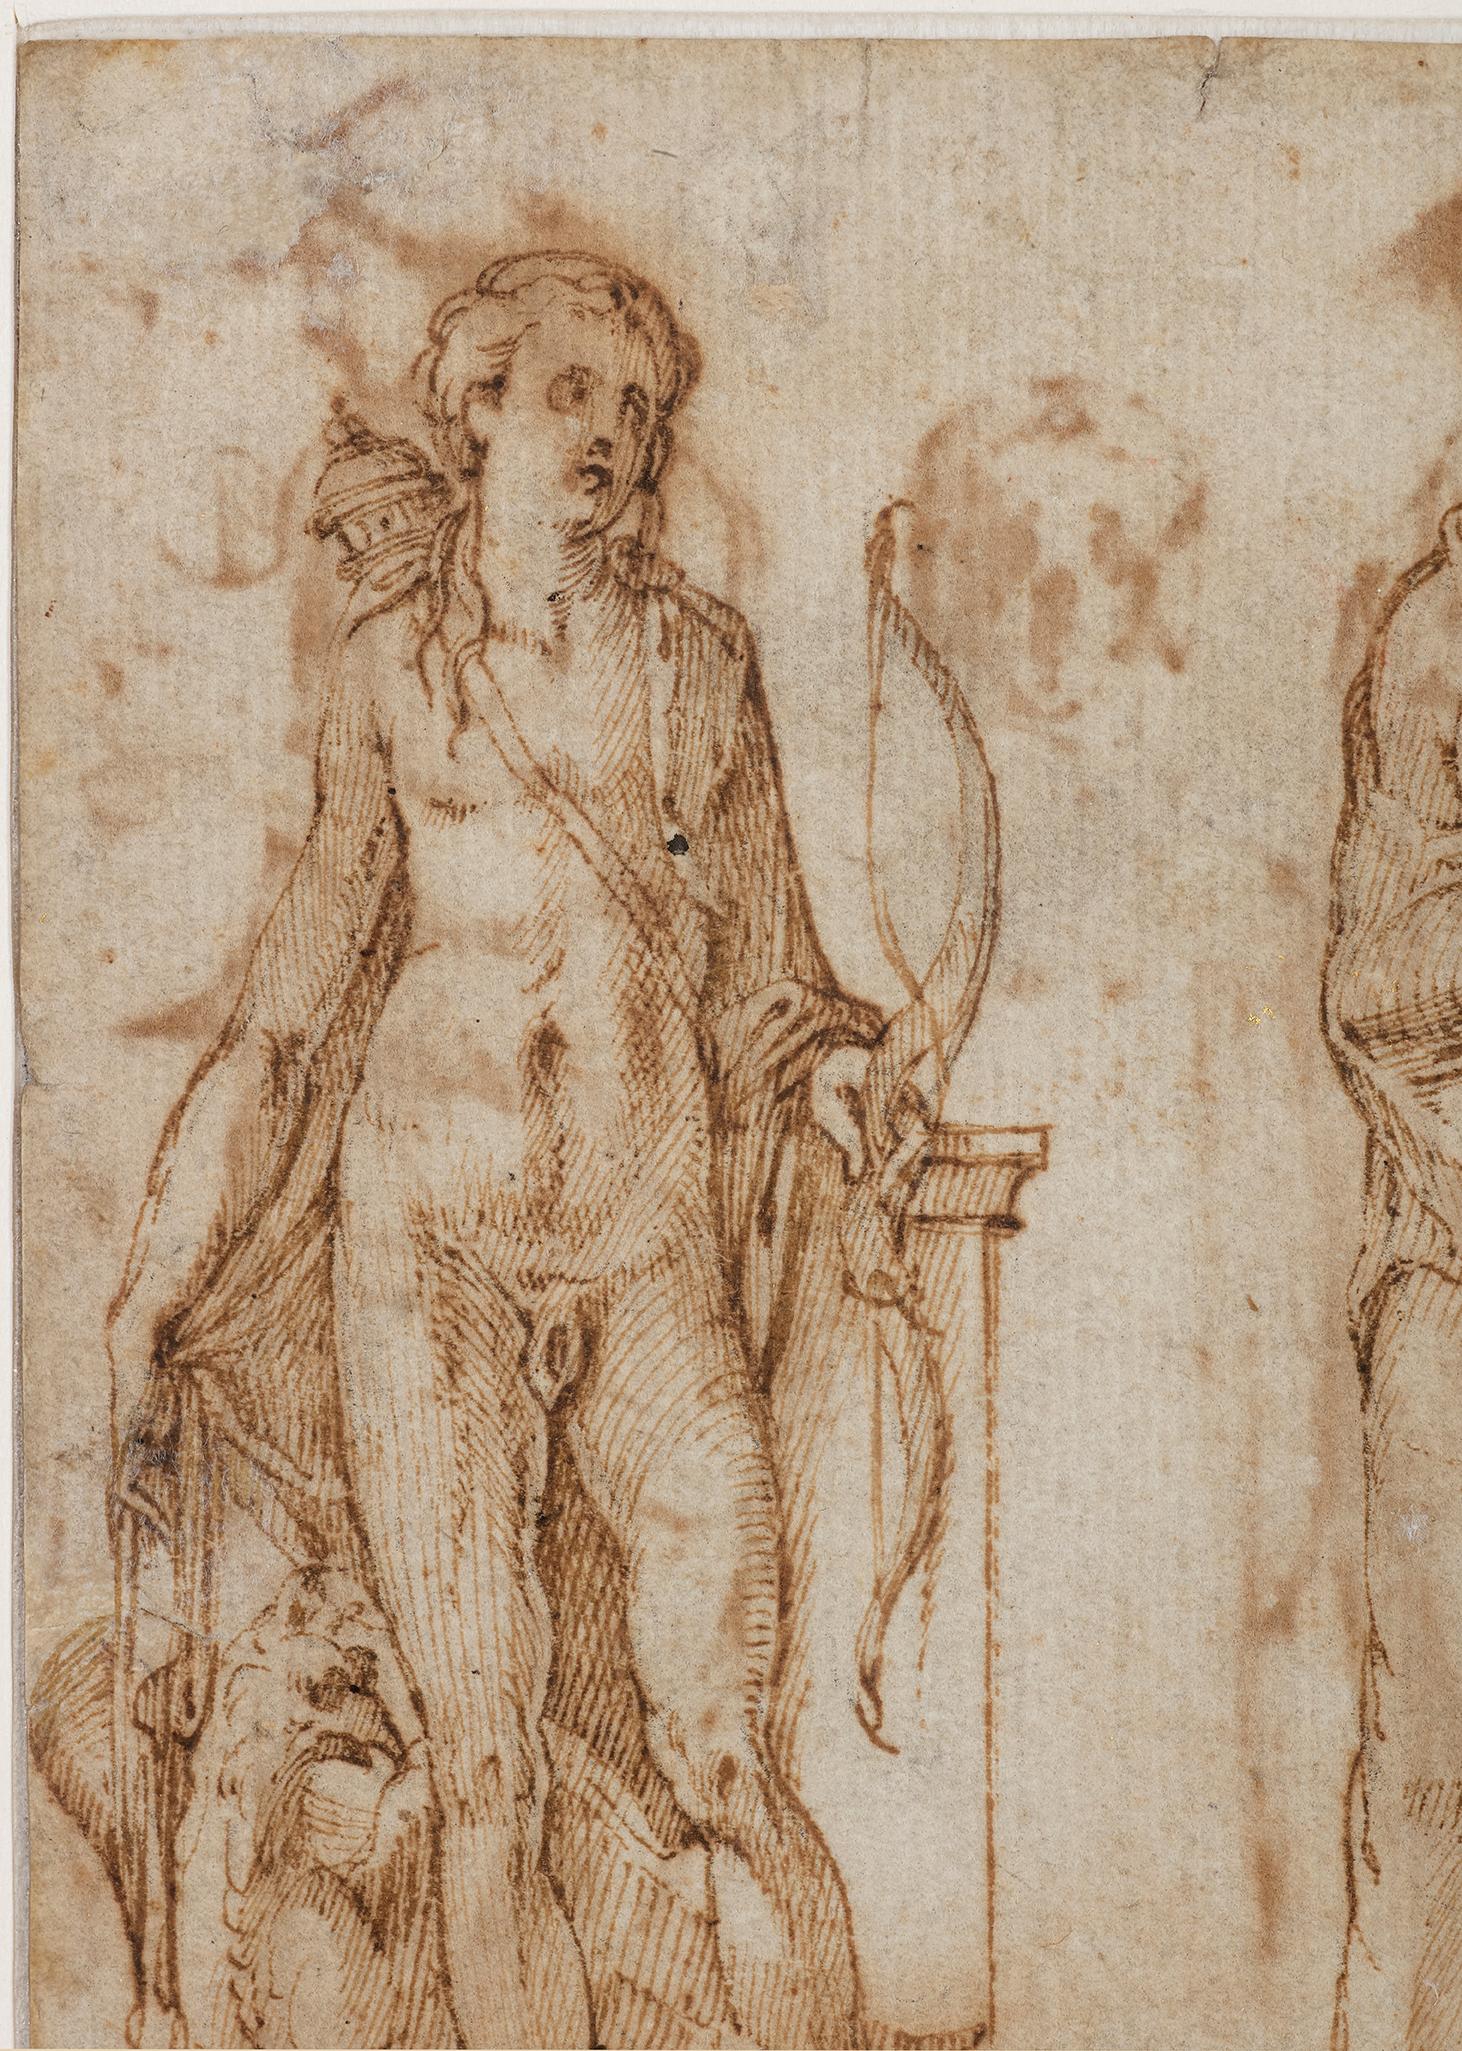 Apollo and the Muses, a Renaissance drawing attributed to Girolamo da Carpi 1